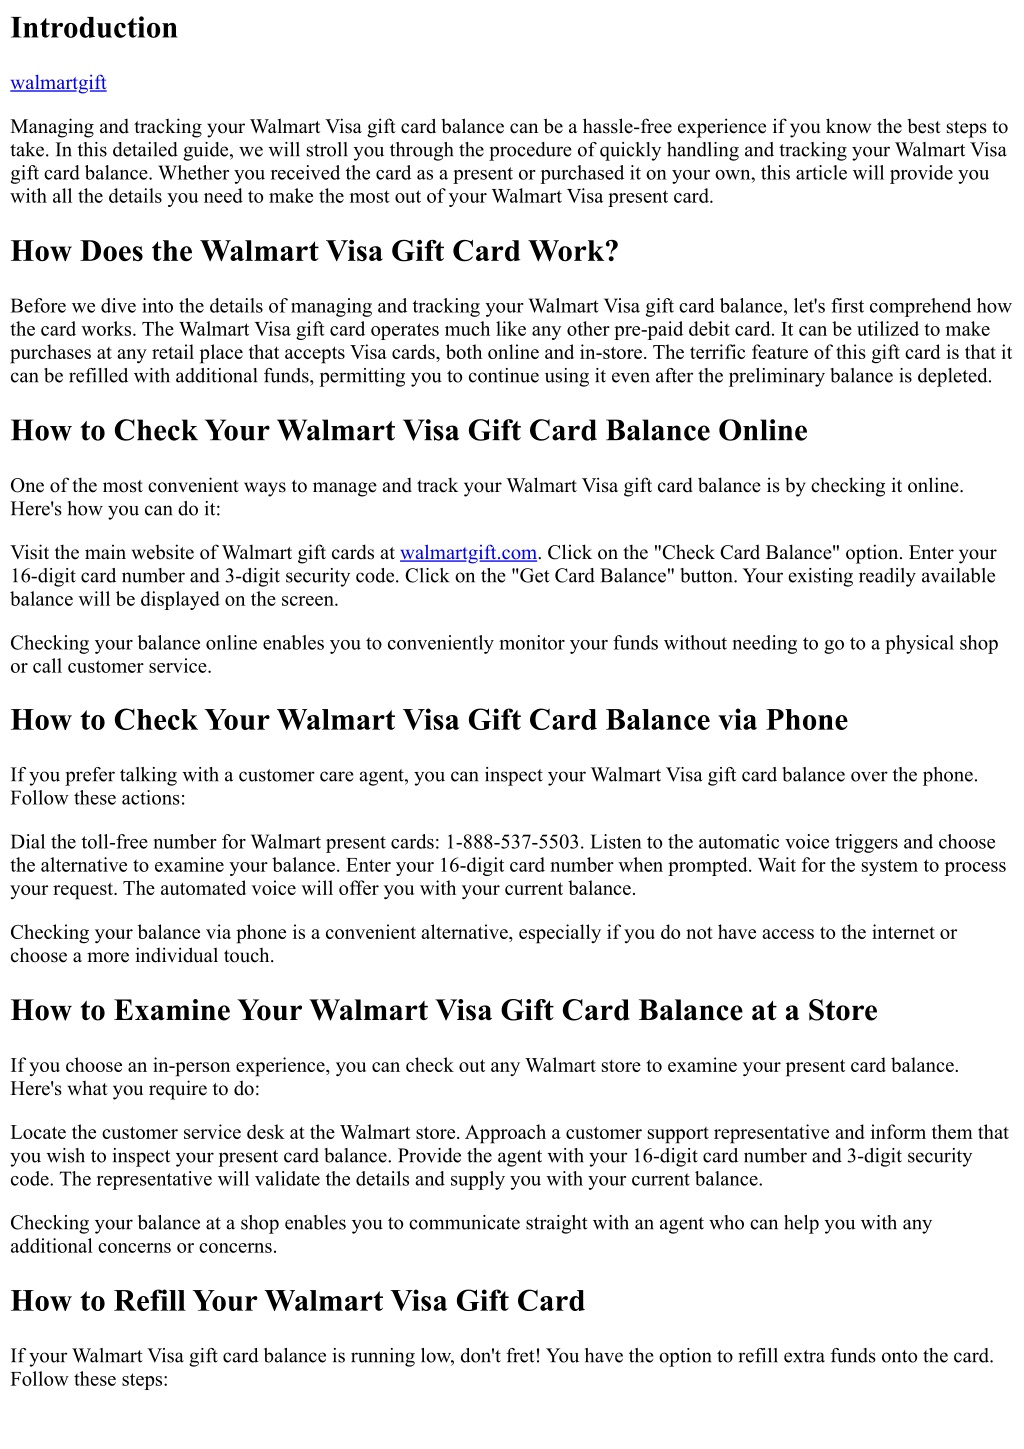 How to check Walmart gift card Visa?